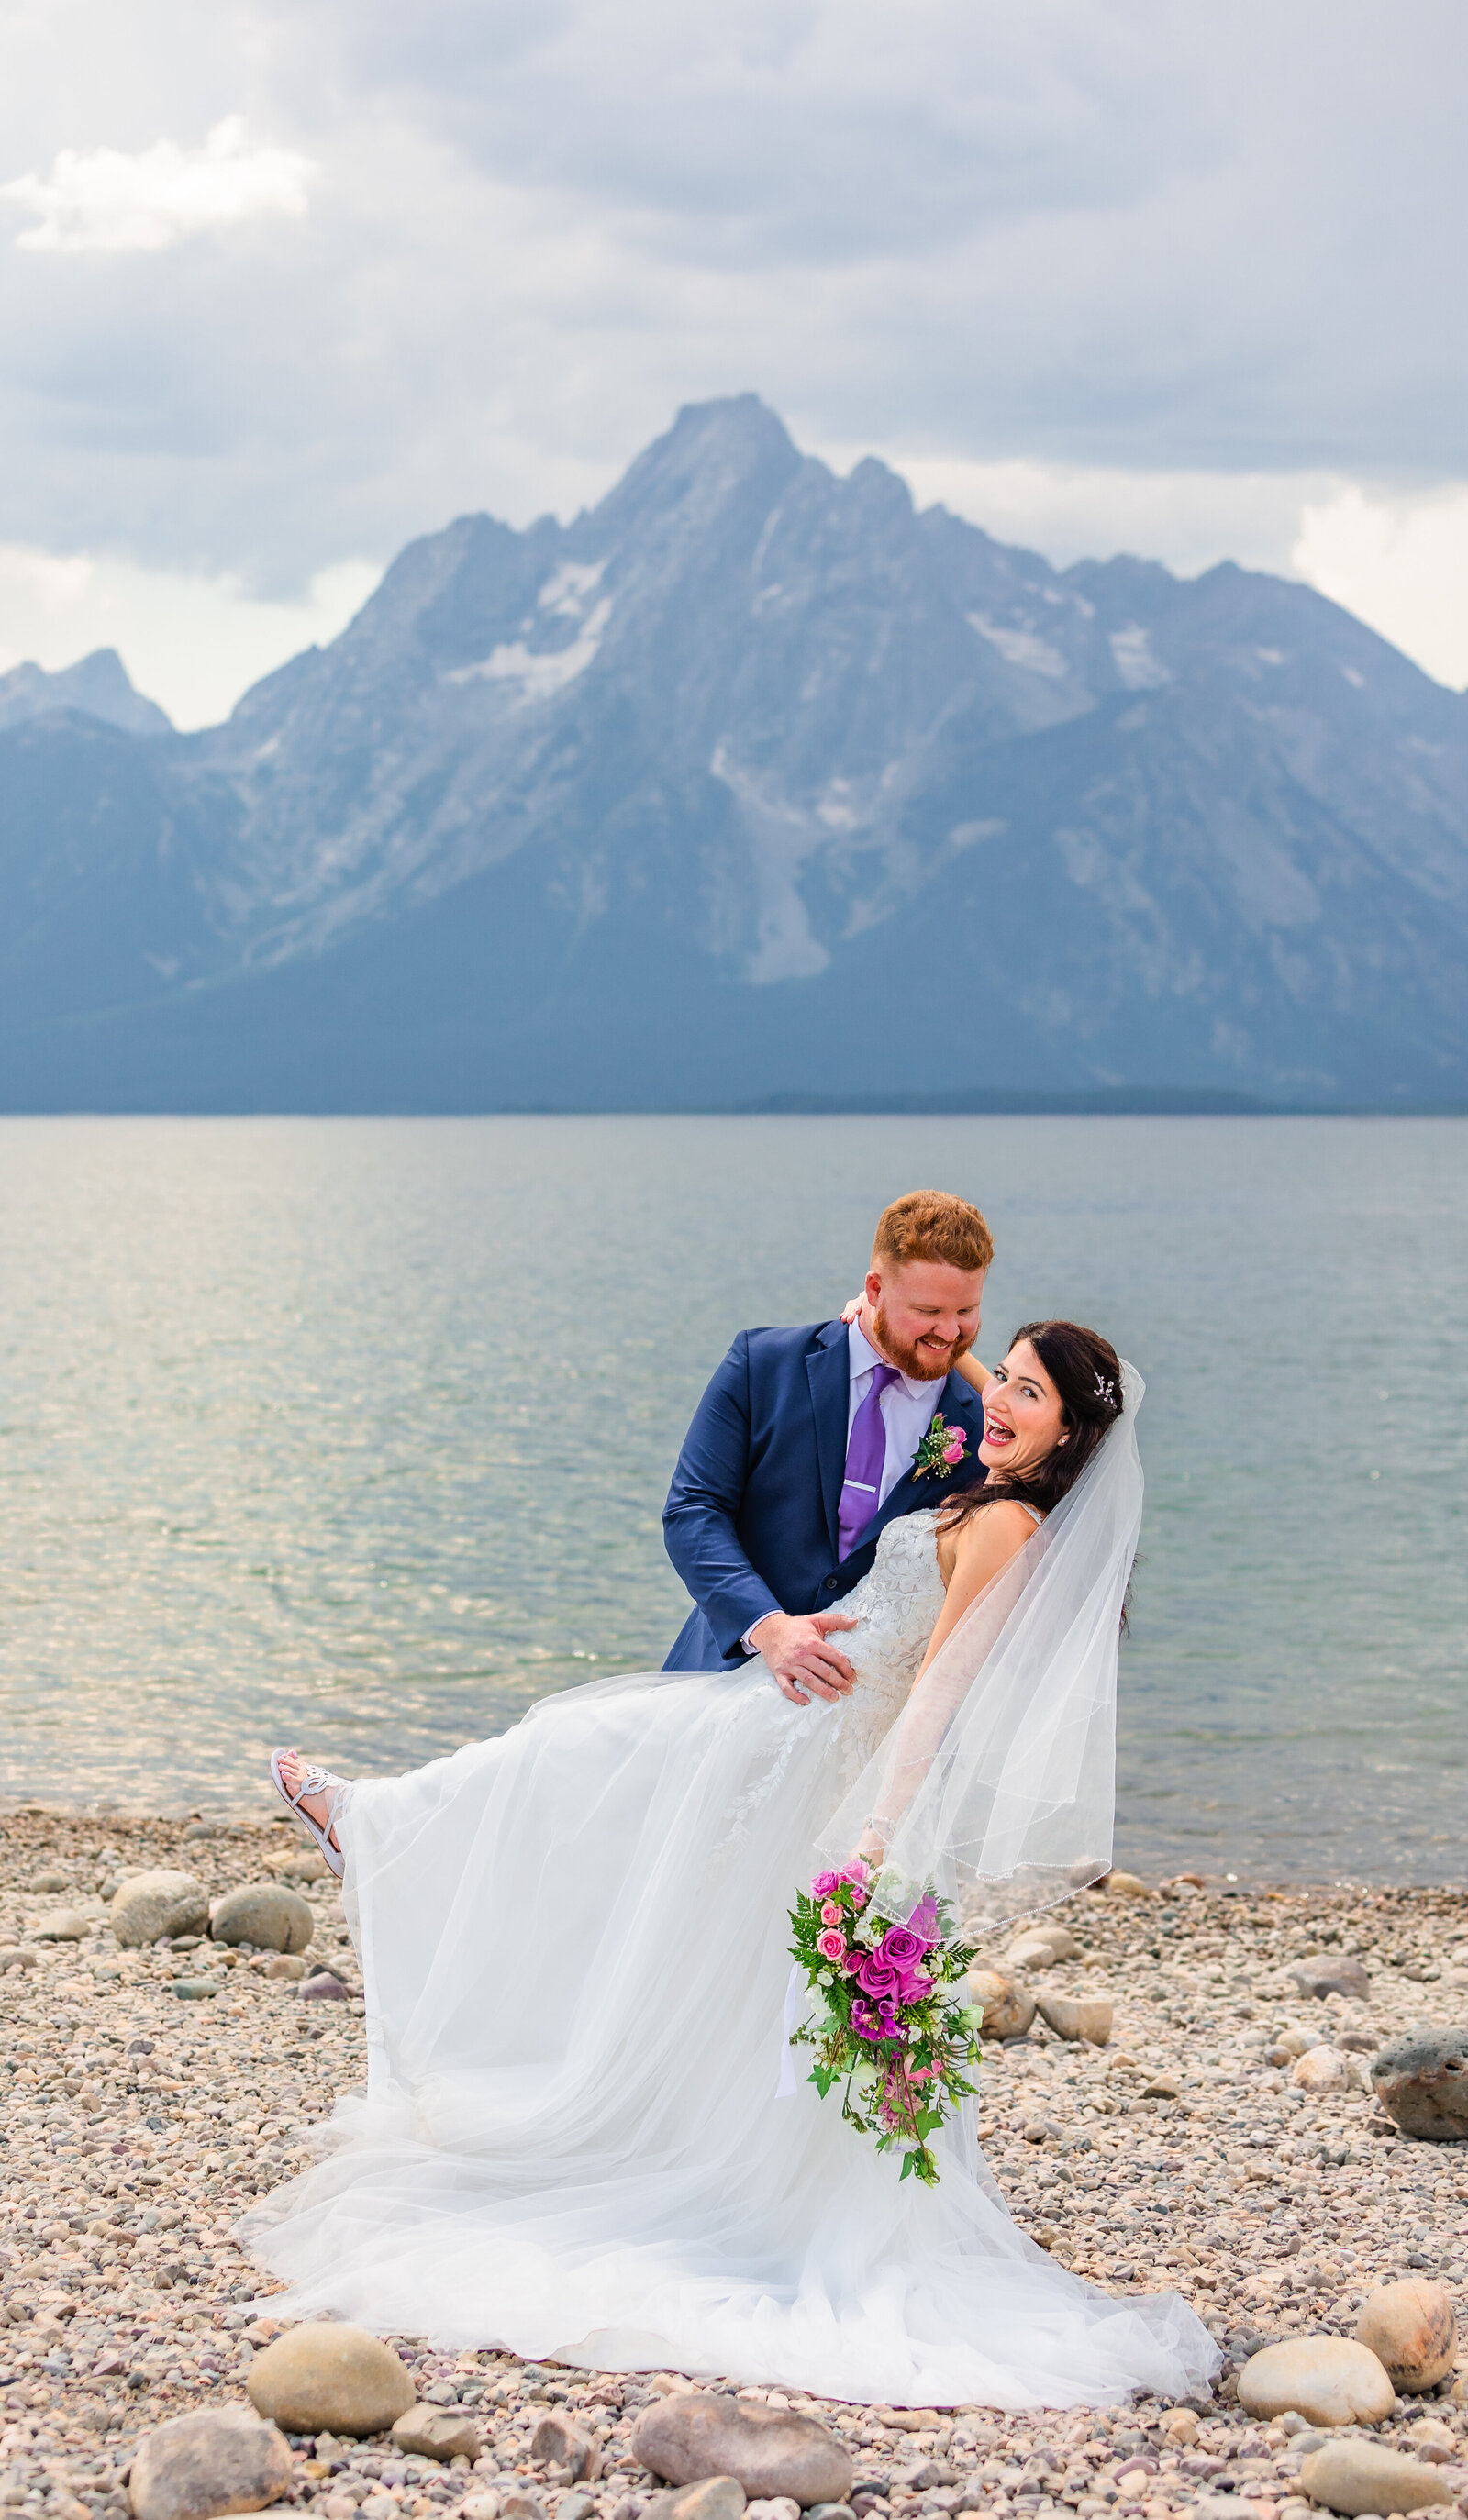 Jackson Hole photographers capture couple in front of tetons after Grand Teton wedding